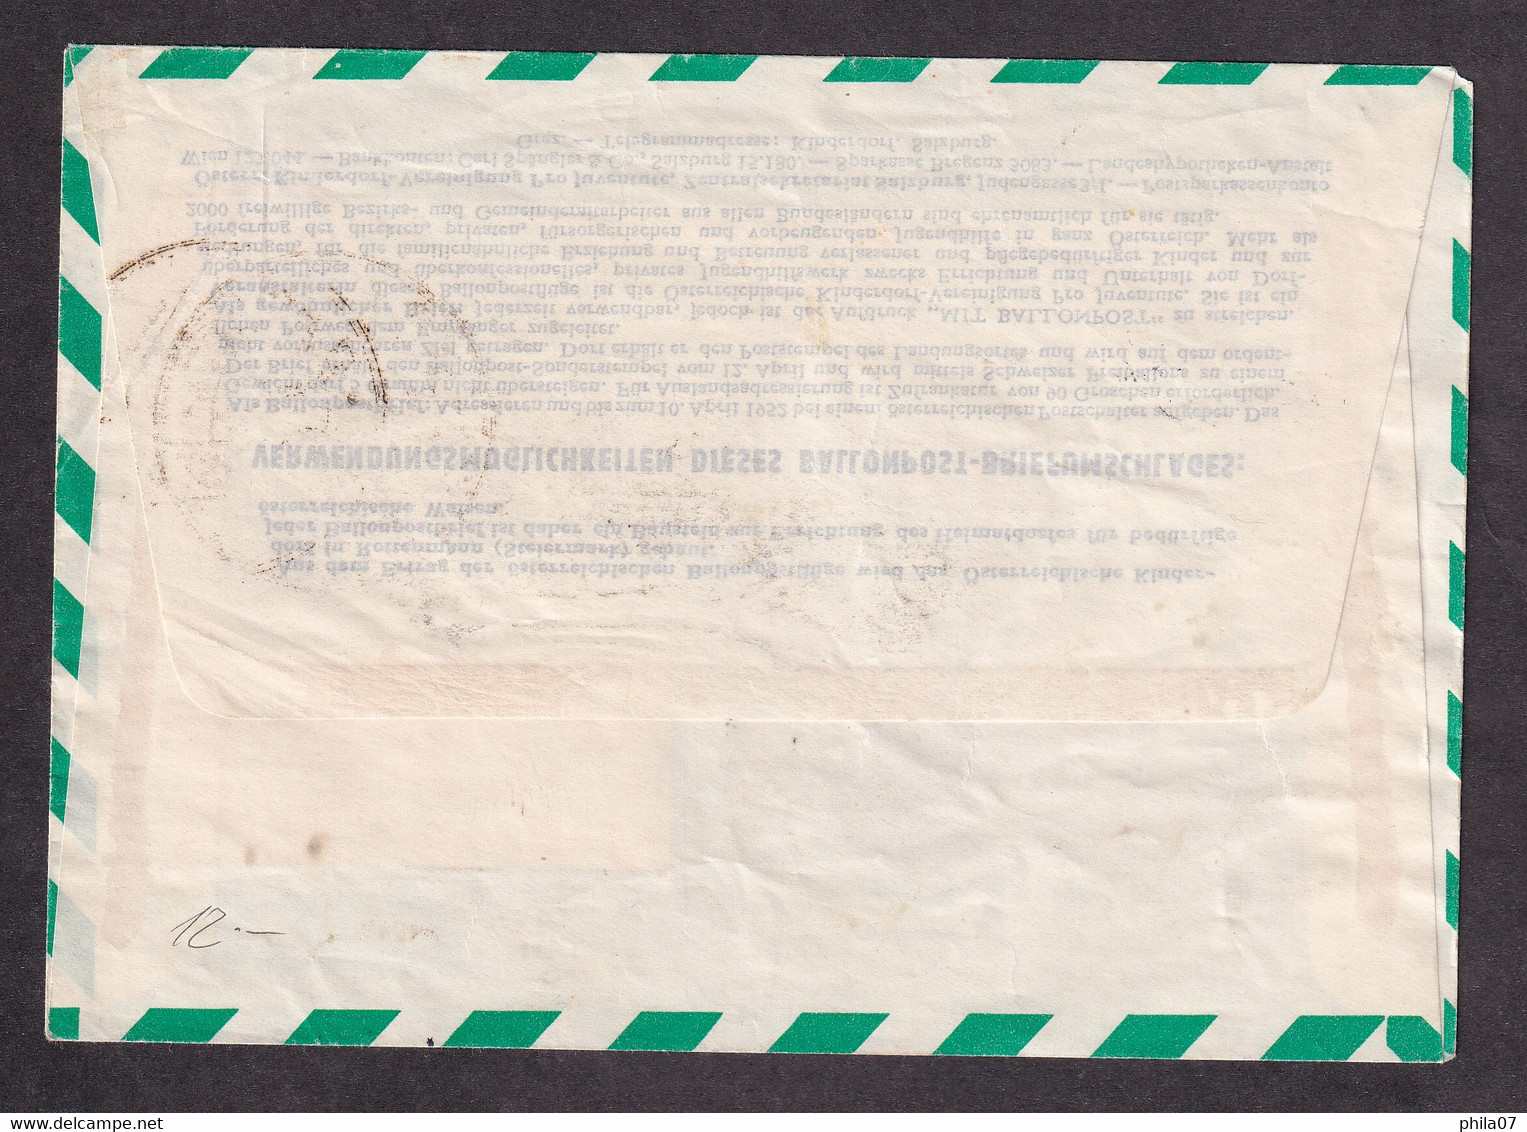 AUSTRIA - 8 Ballonpost, Envelope With Imprinted Value, Sent From Bregenza To Switzerland 12.04. 1952.  / 2 Scan - Ballonpost